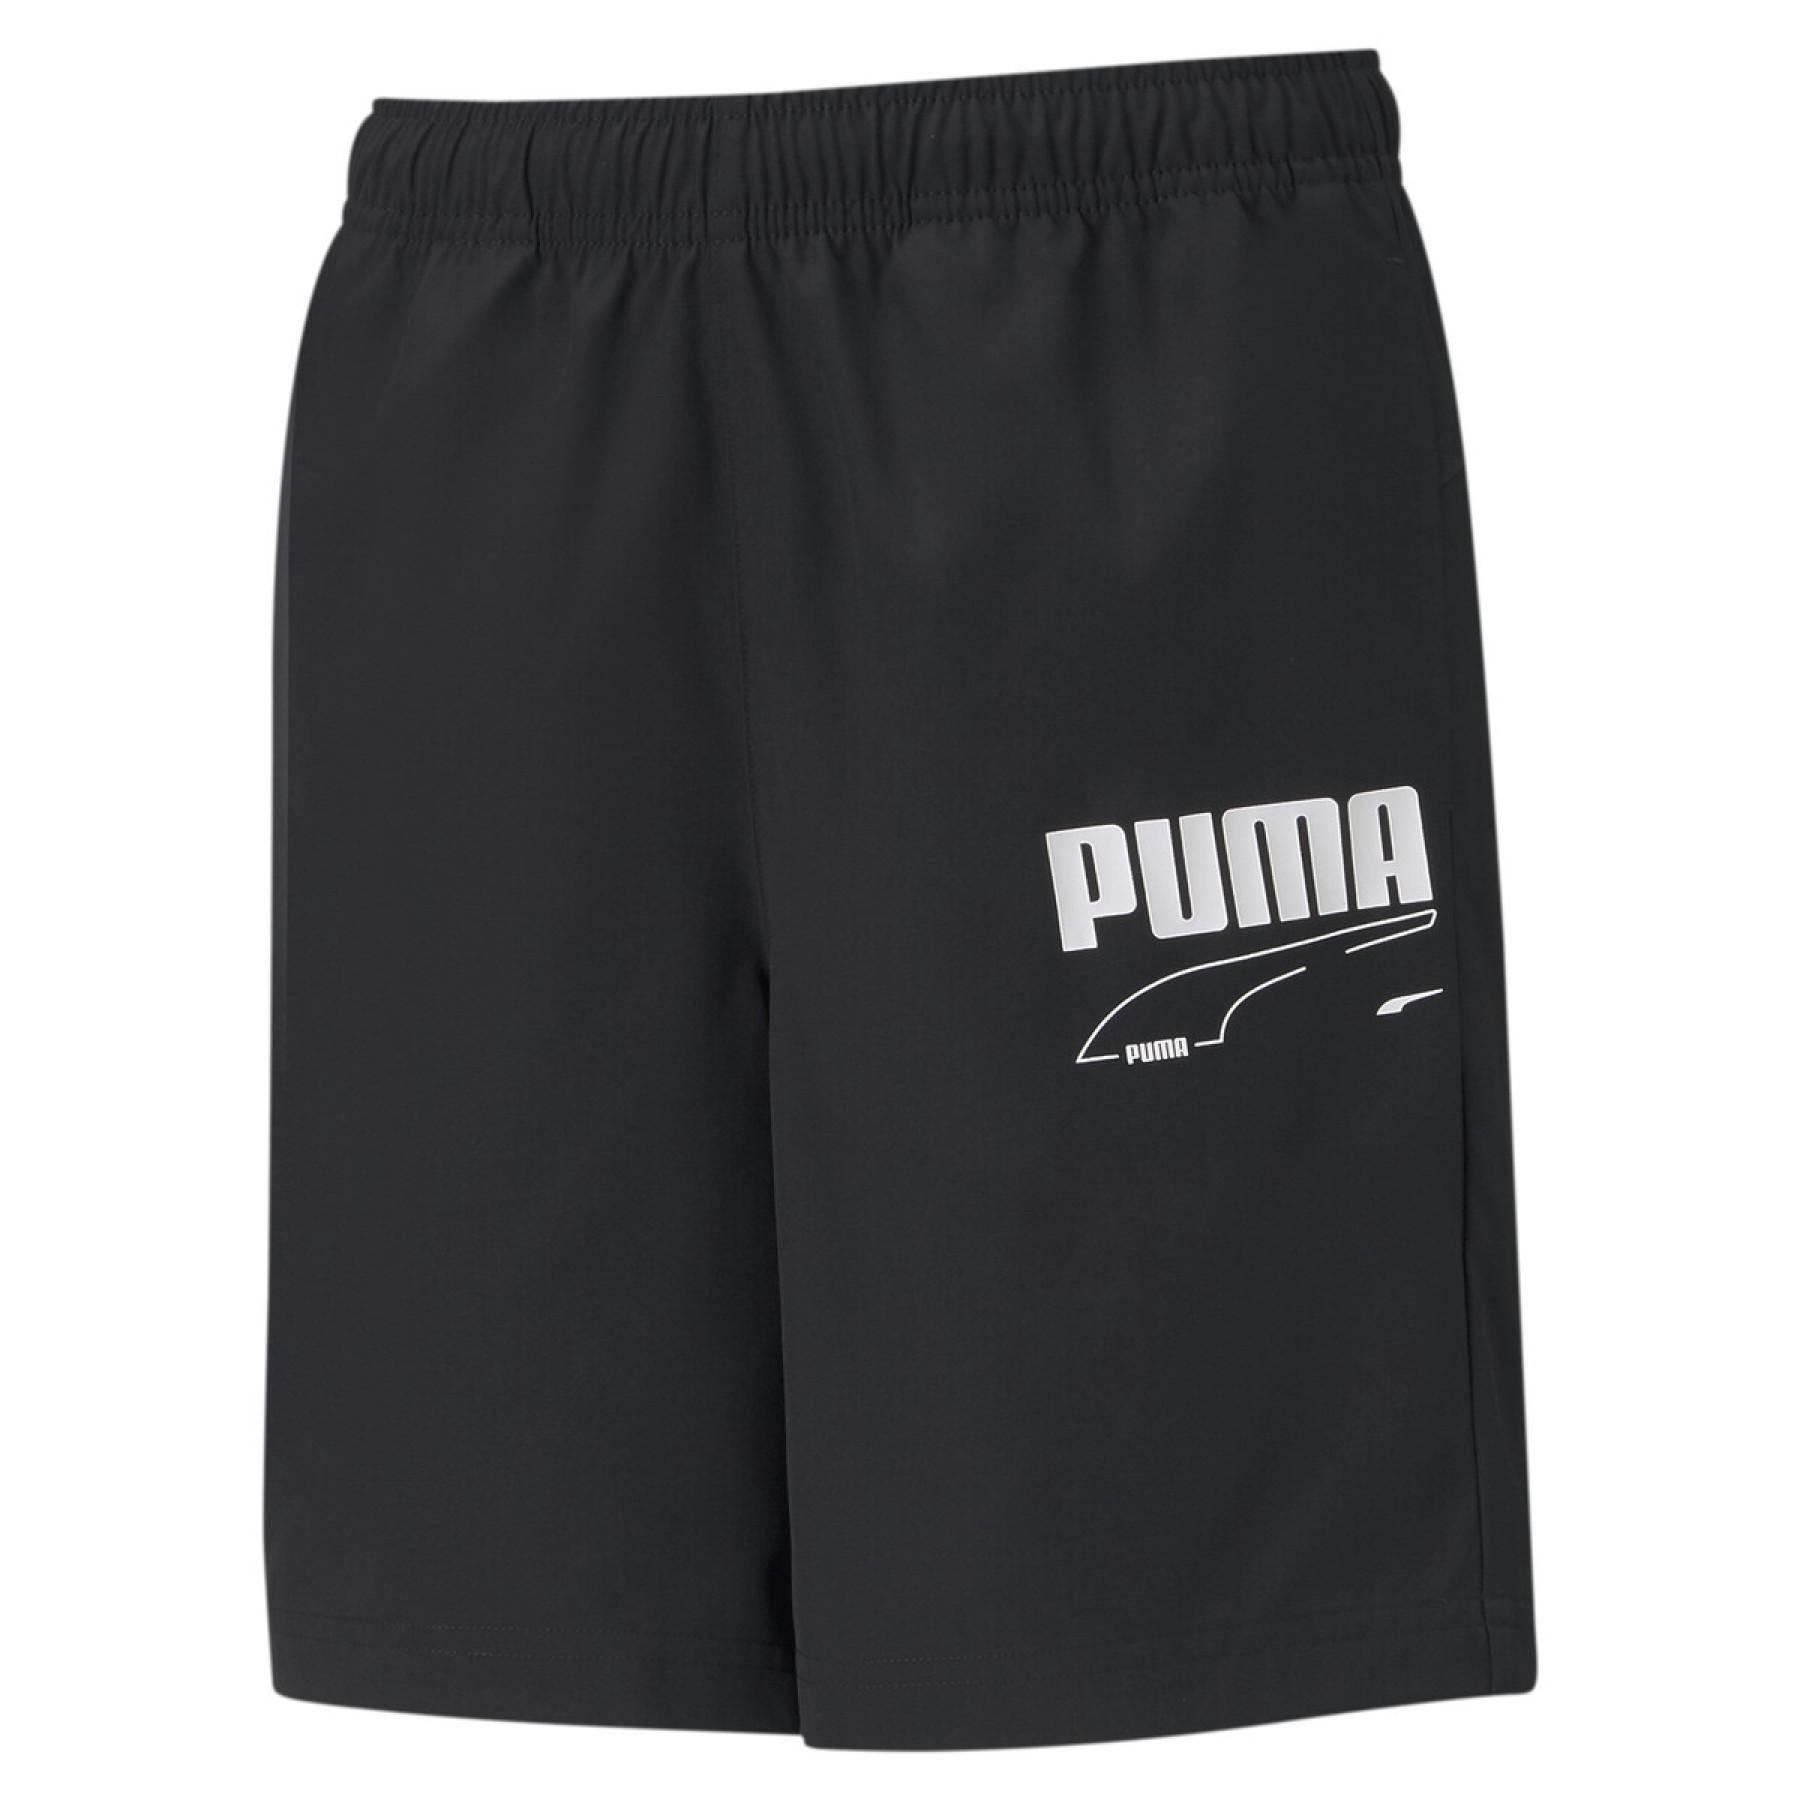 Pantalones cortos para niños Puma Rebel Woven s B